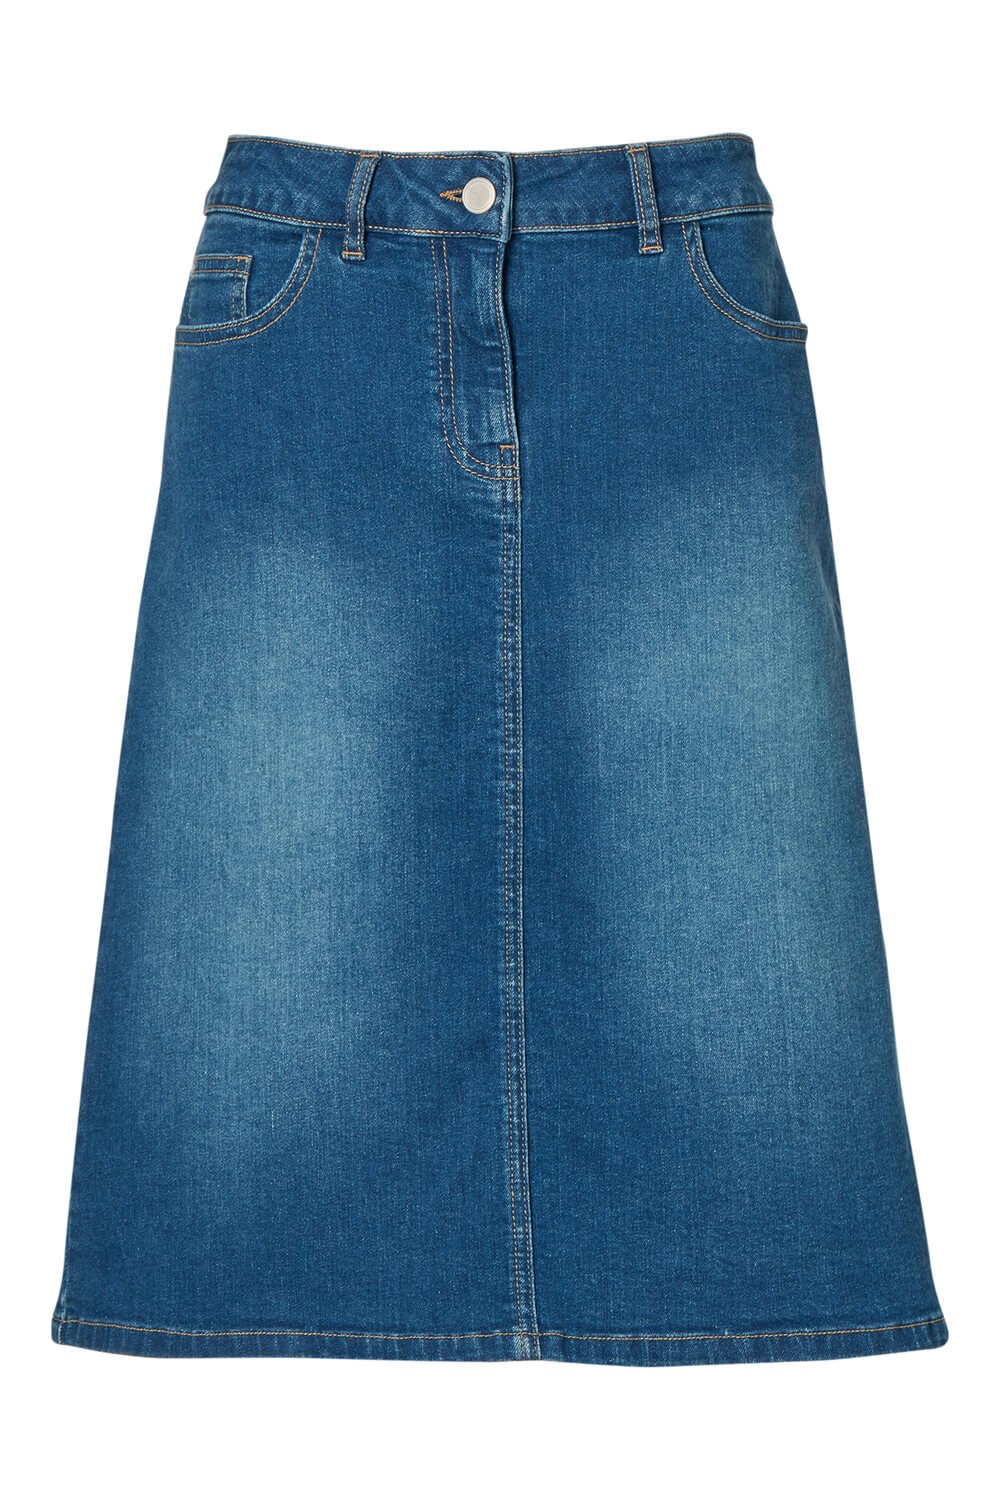 Denim Cotton Denim Stretch Skirt, Image 5 of 5